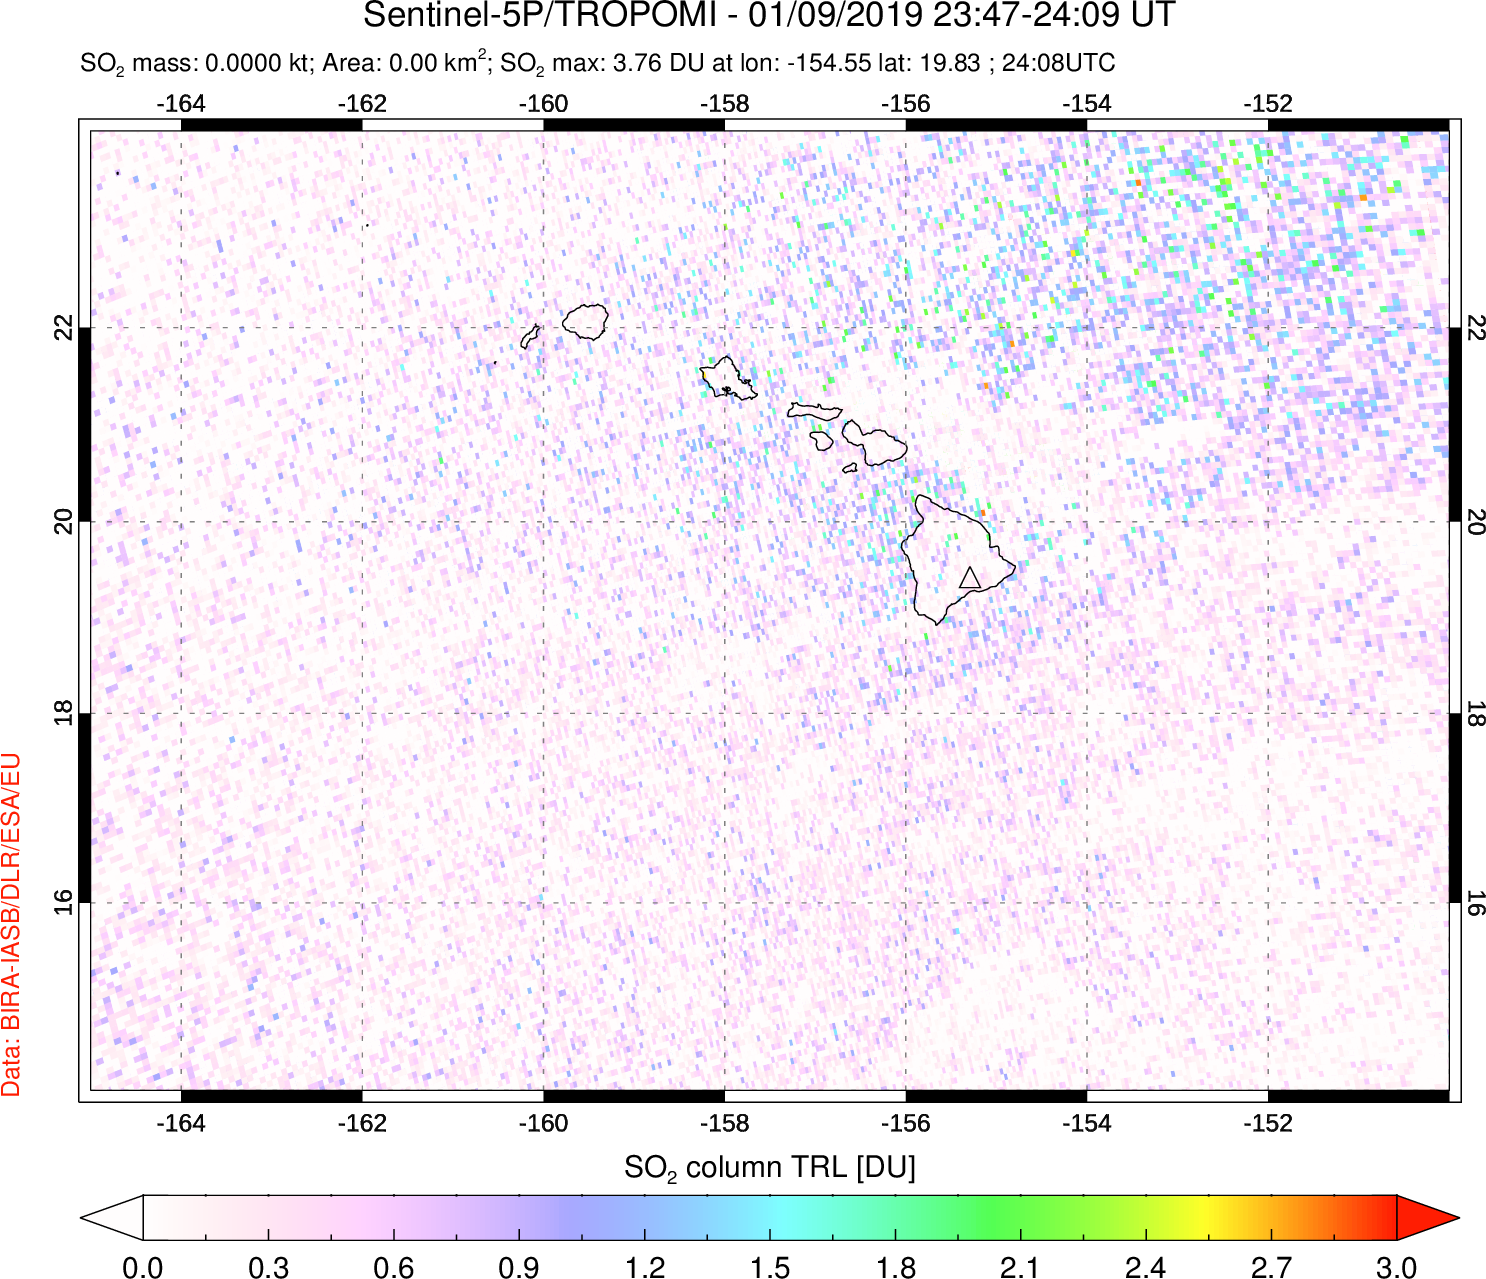 A sulfur dioxide image over Hawaii, USA on Jan 09, 2019.